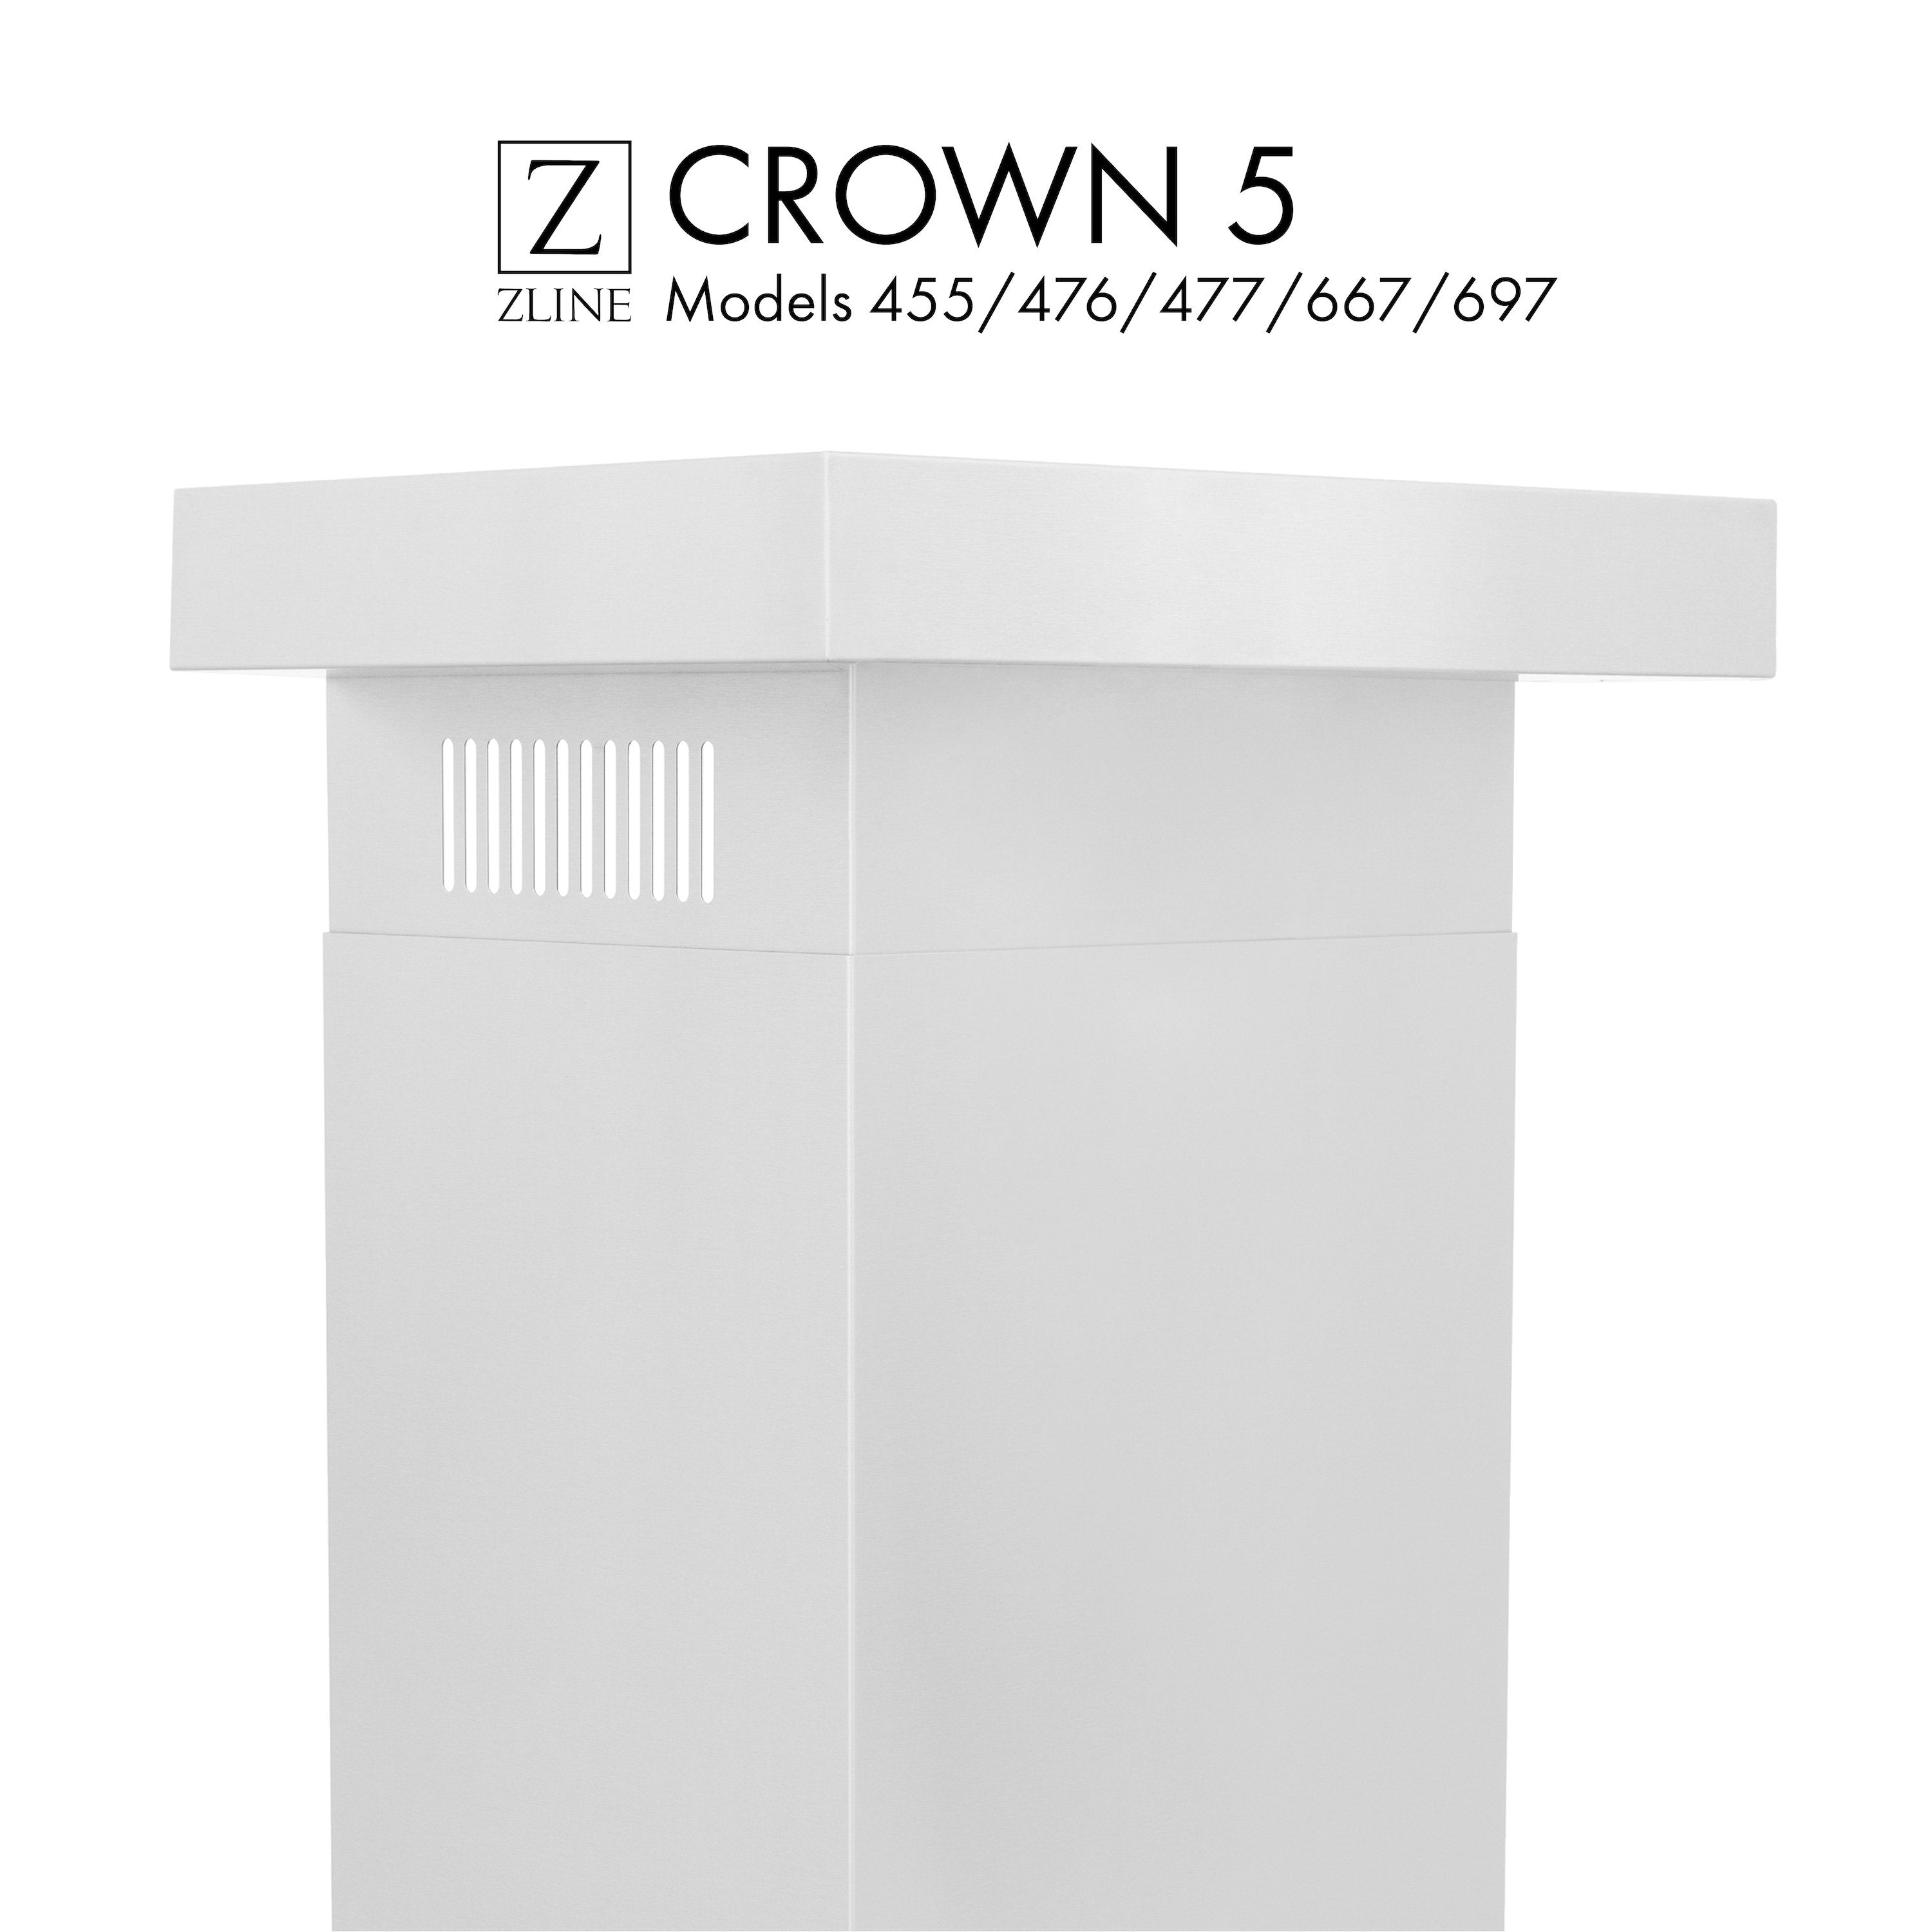 ZLINE Crown Molding #5 For Wall Range Hood (CM5-455/476/477/667/697)